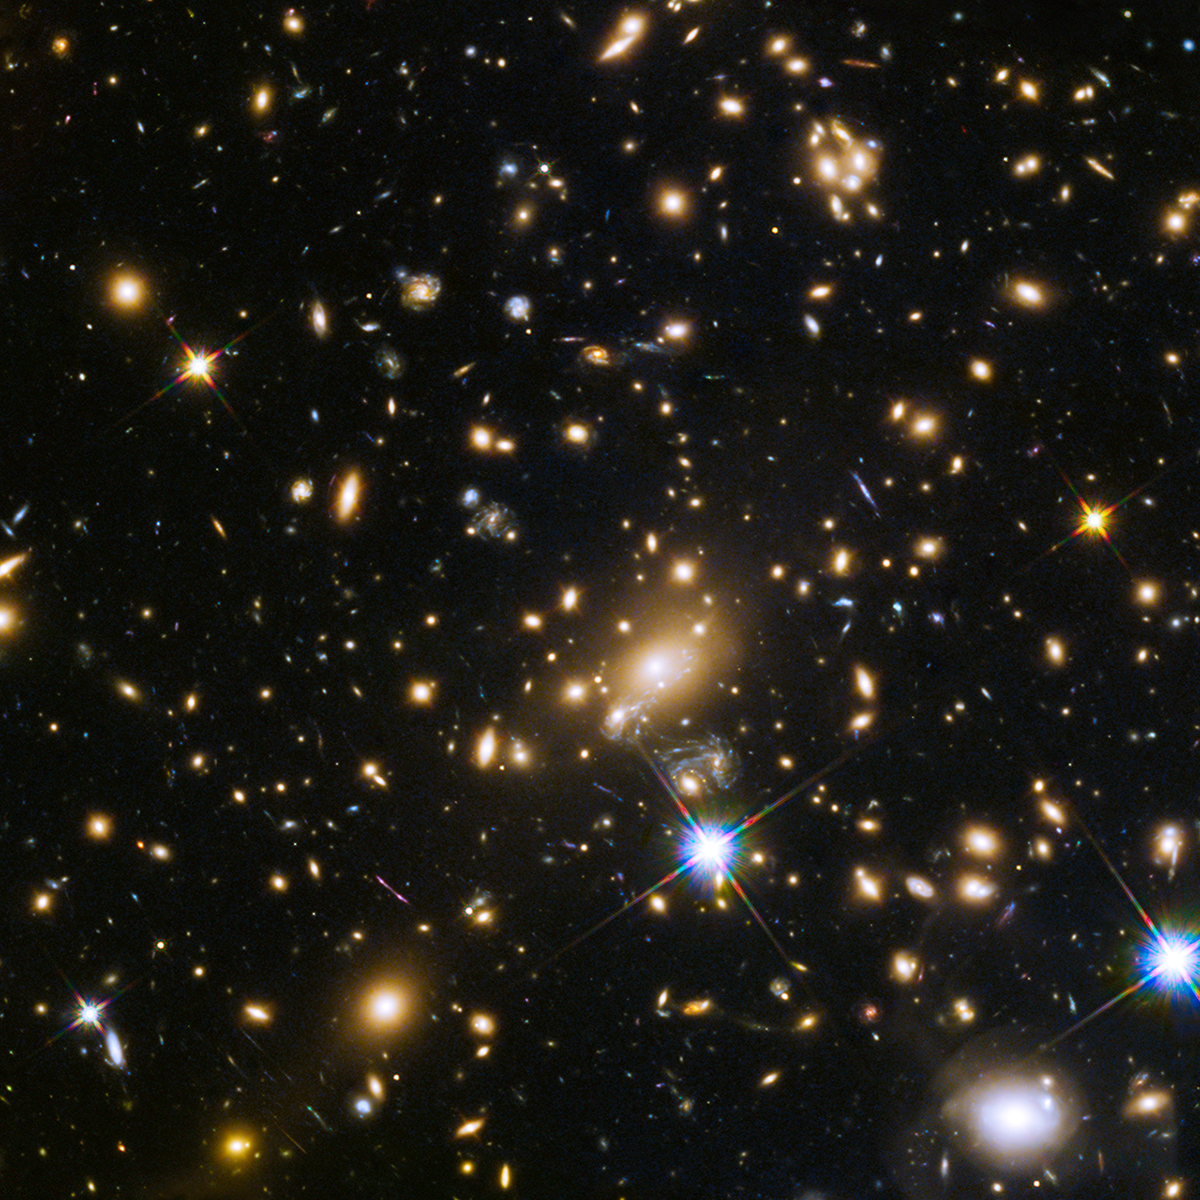 december-14-2019-galaxy-cluster-macs-j1149-6-2223.jpg